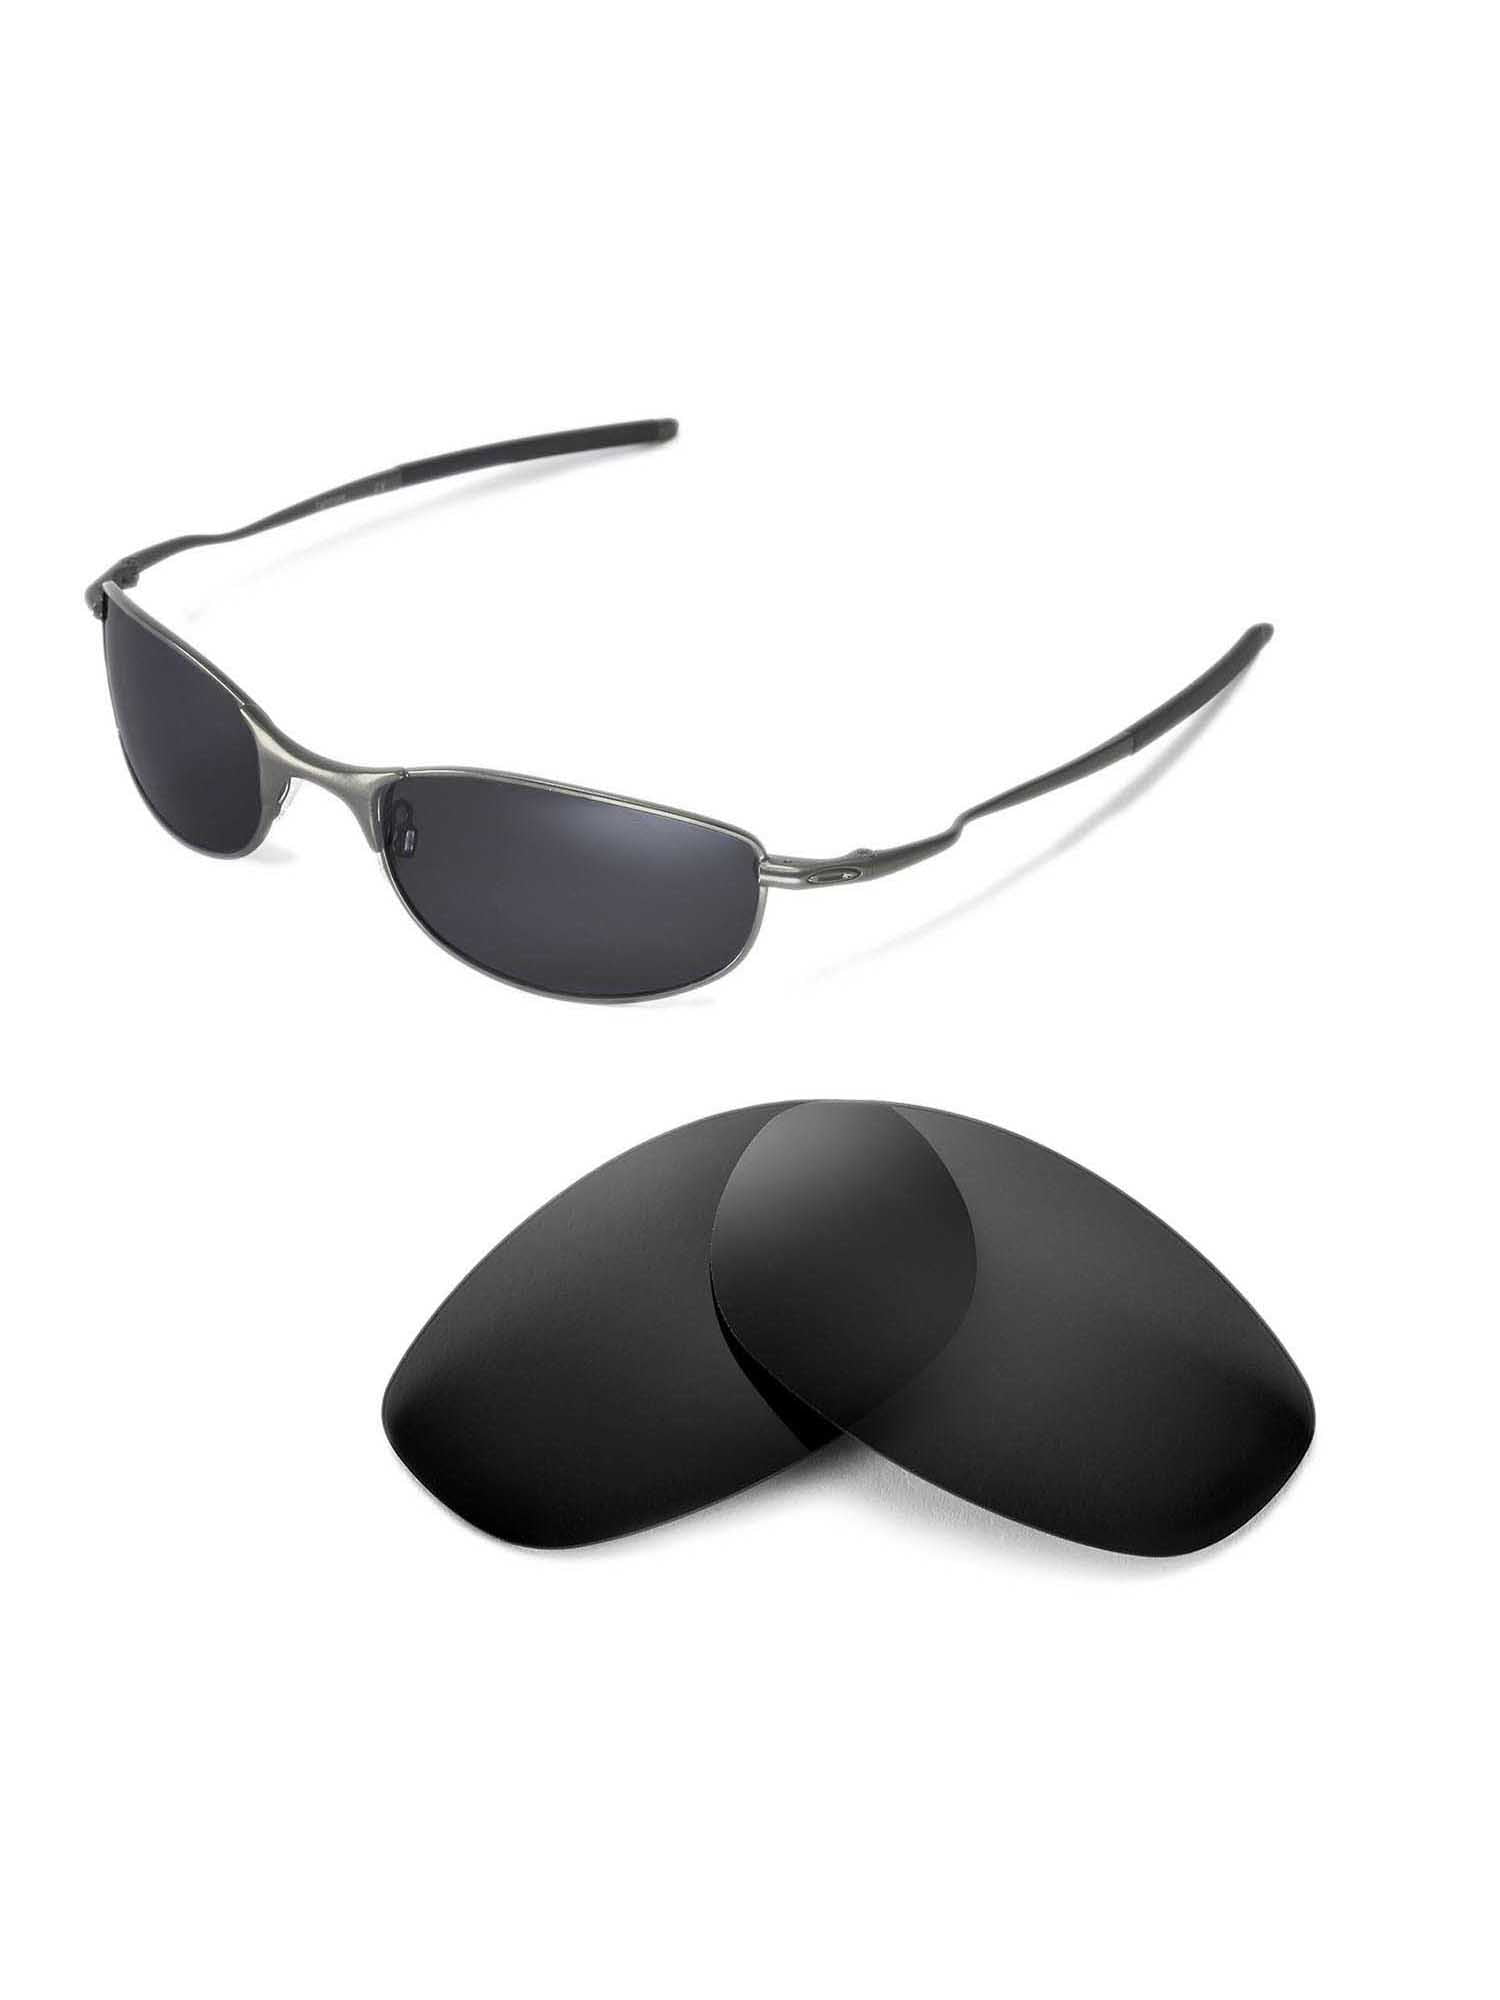 Emerald Replacement for Oakley Tightrope Sunglasses Walmart.com